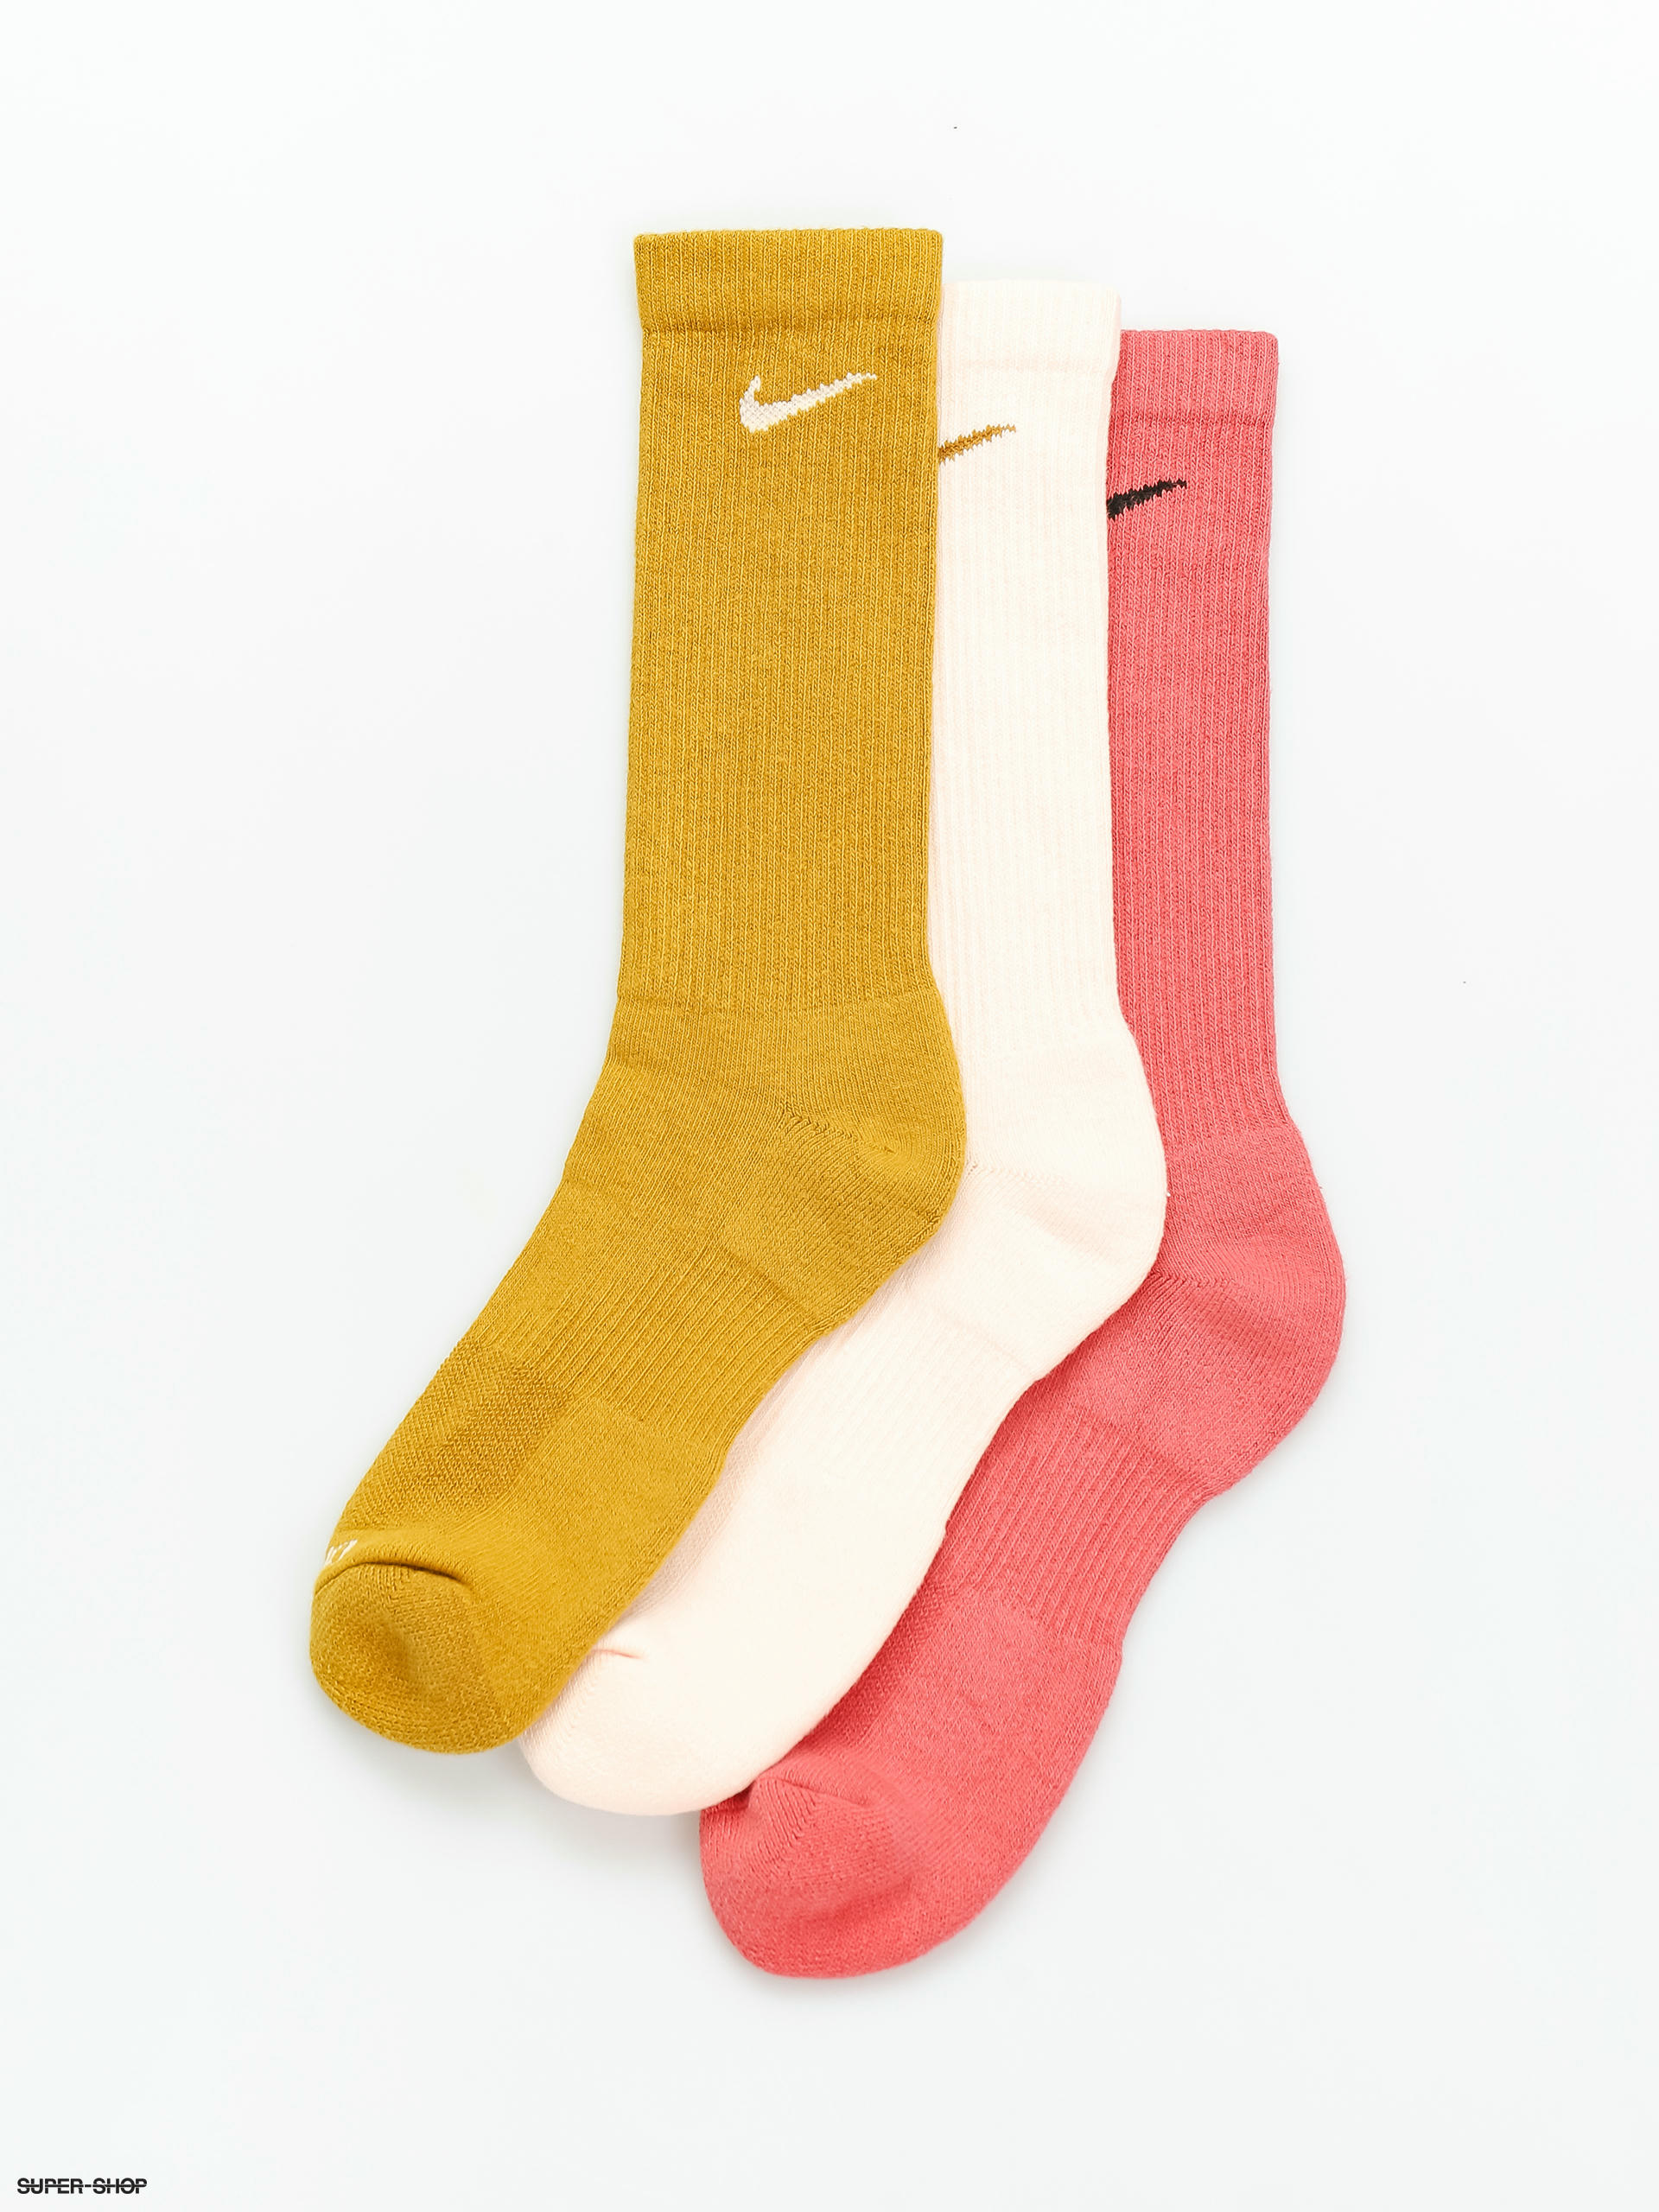 https://static.super-shop.com/1413333-nike-sb-everyday-plus-cushioned-socks-multi-color.jpg?w=1920